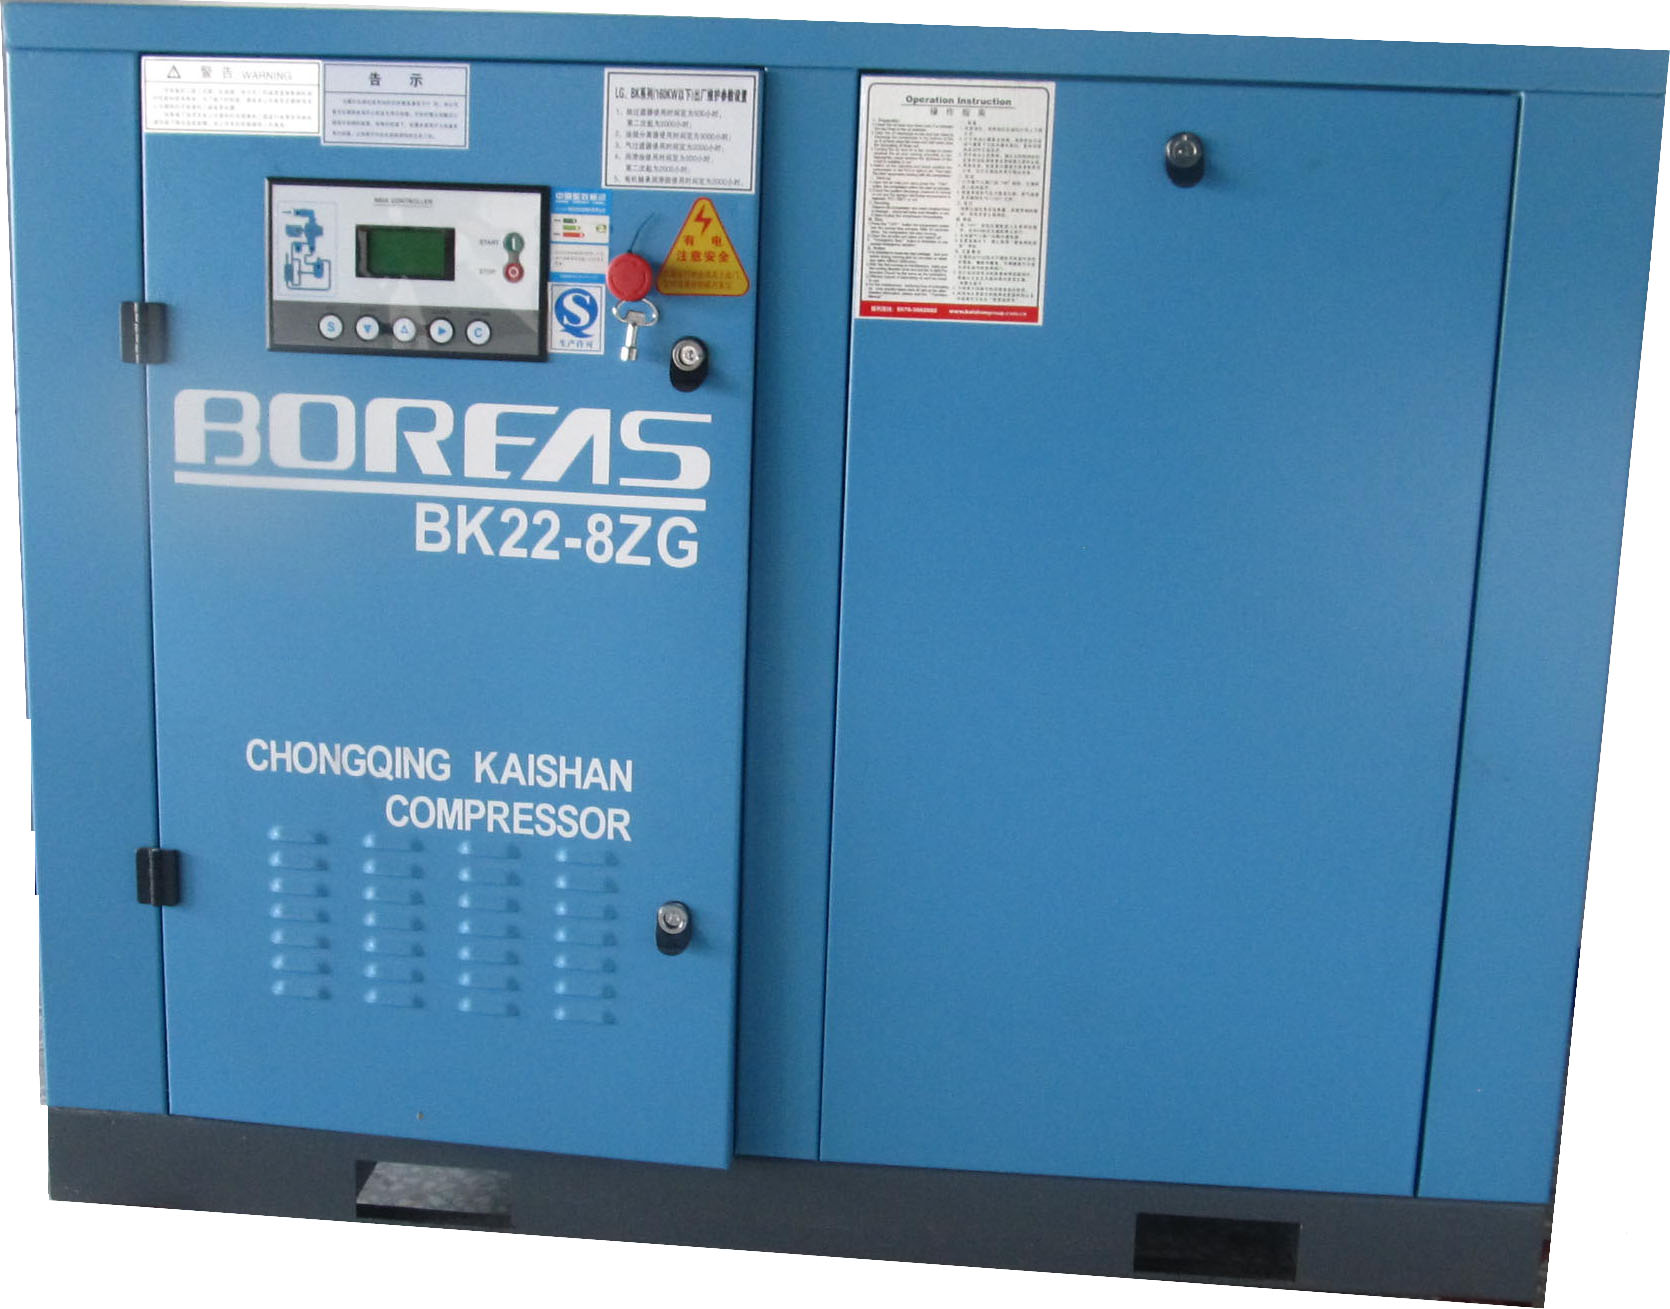 BOREAS air compressor